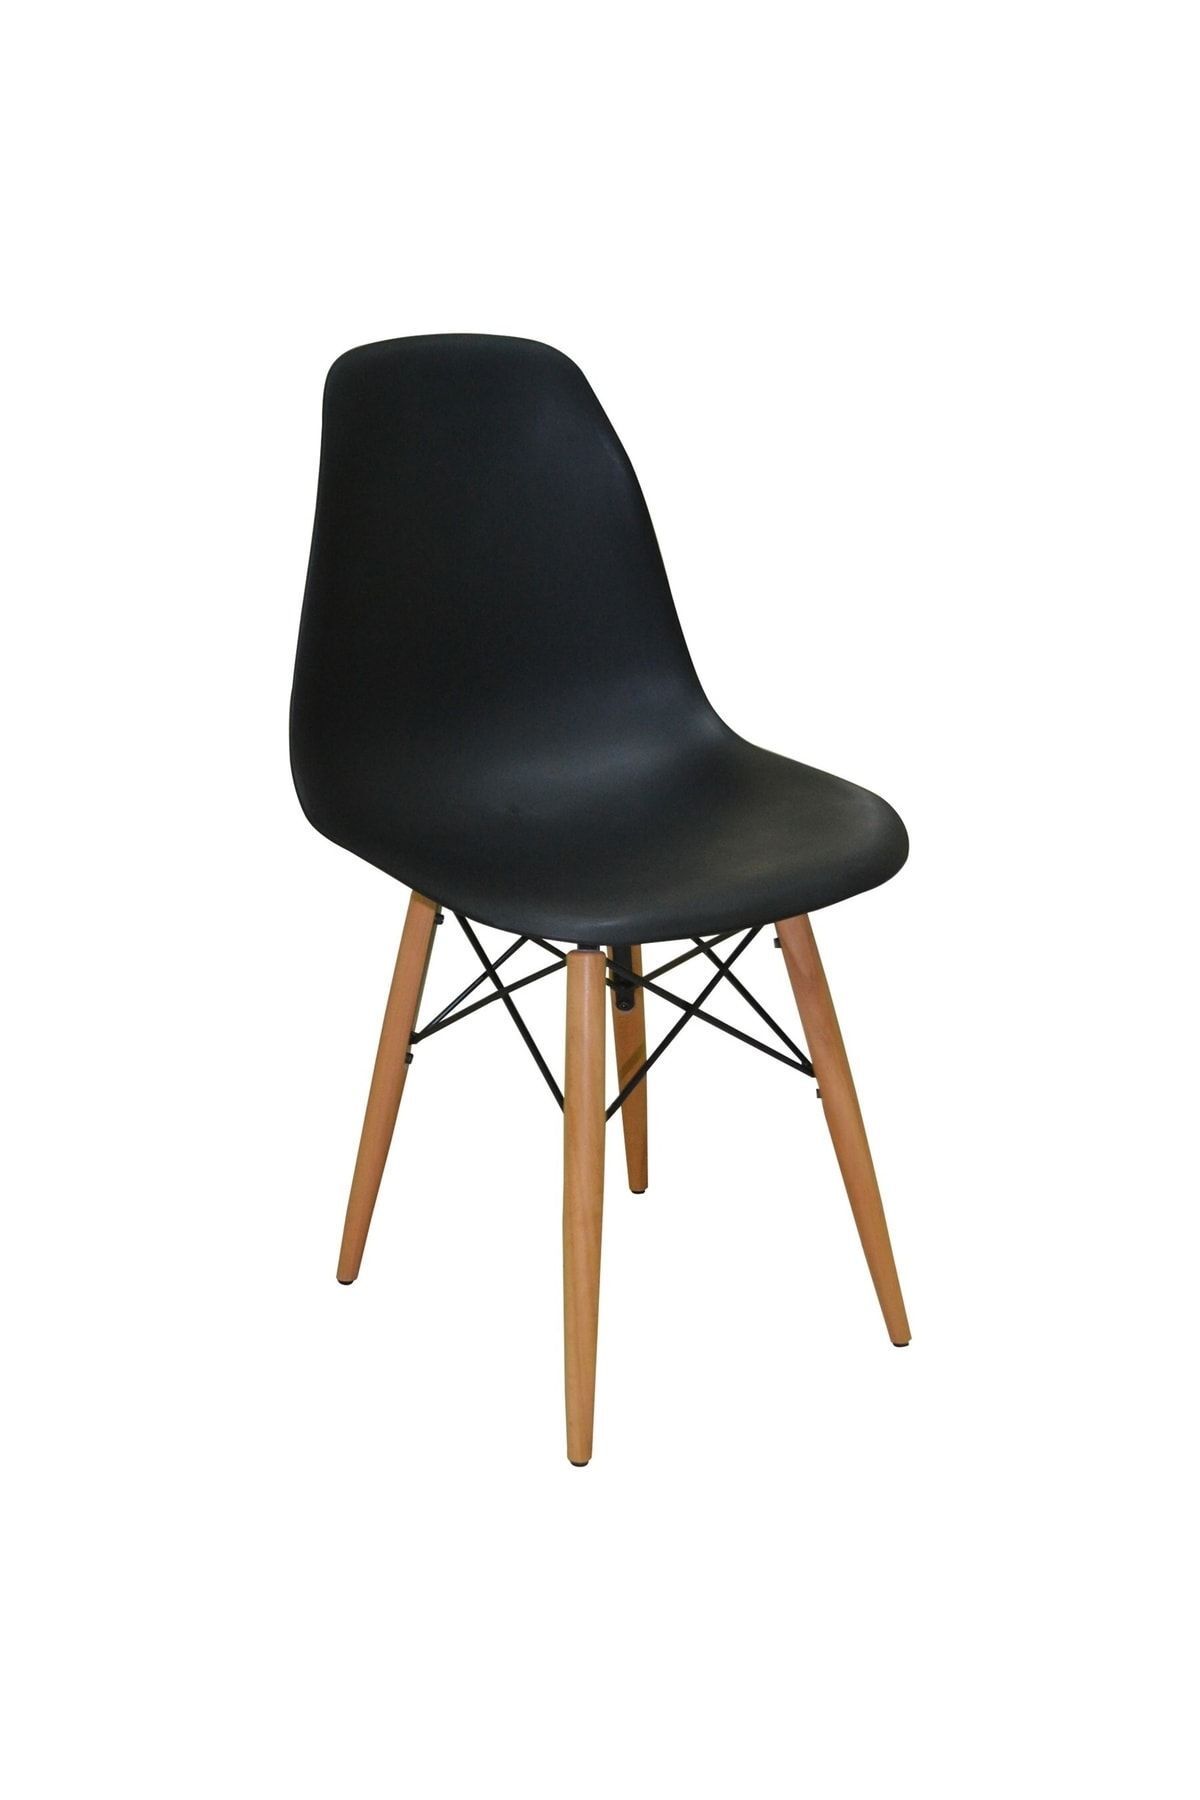 Woodesk Luna Ağaç Ayaklı Modern Siyah Eames Sandalye Snd3006-syh